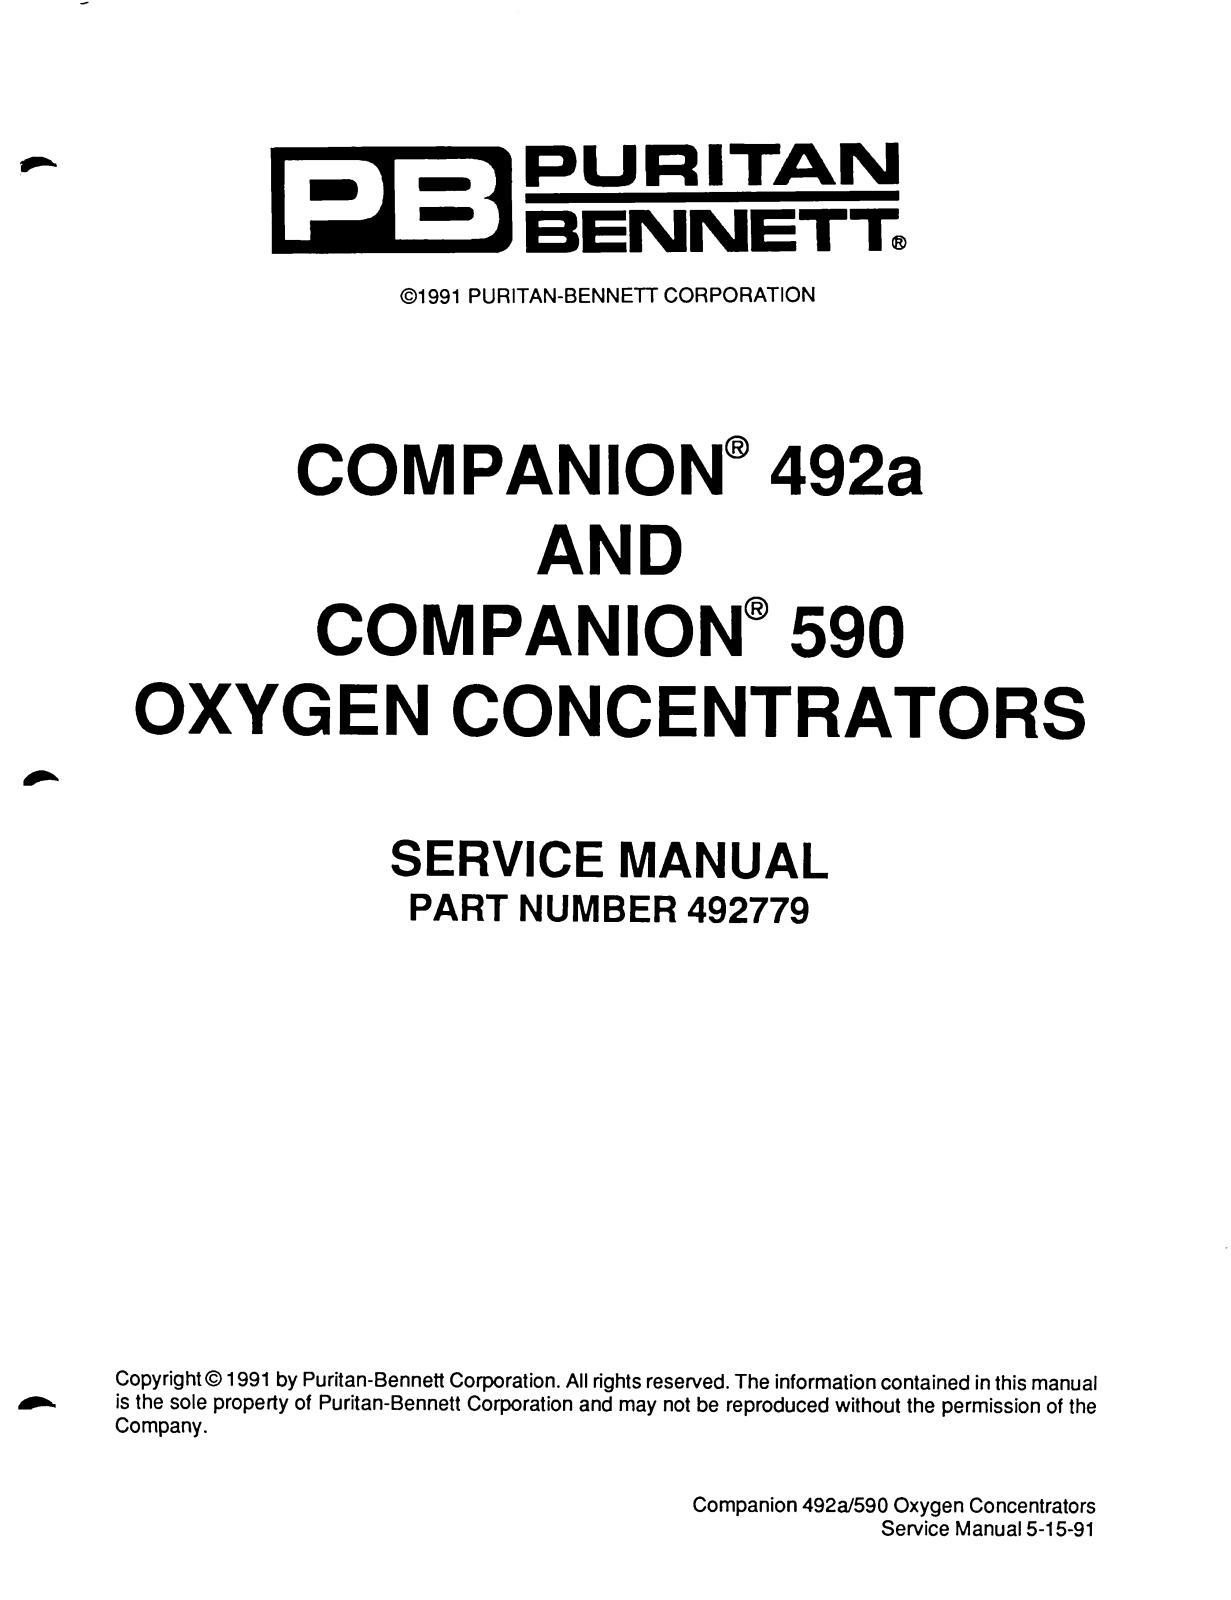 Puritan-Bennett Companion 492, Companion 590 Service manual